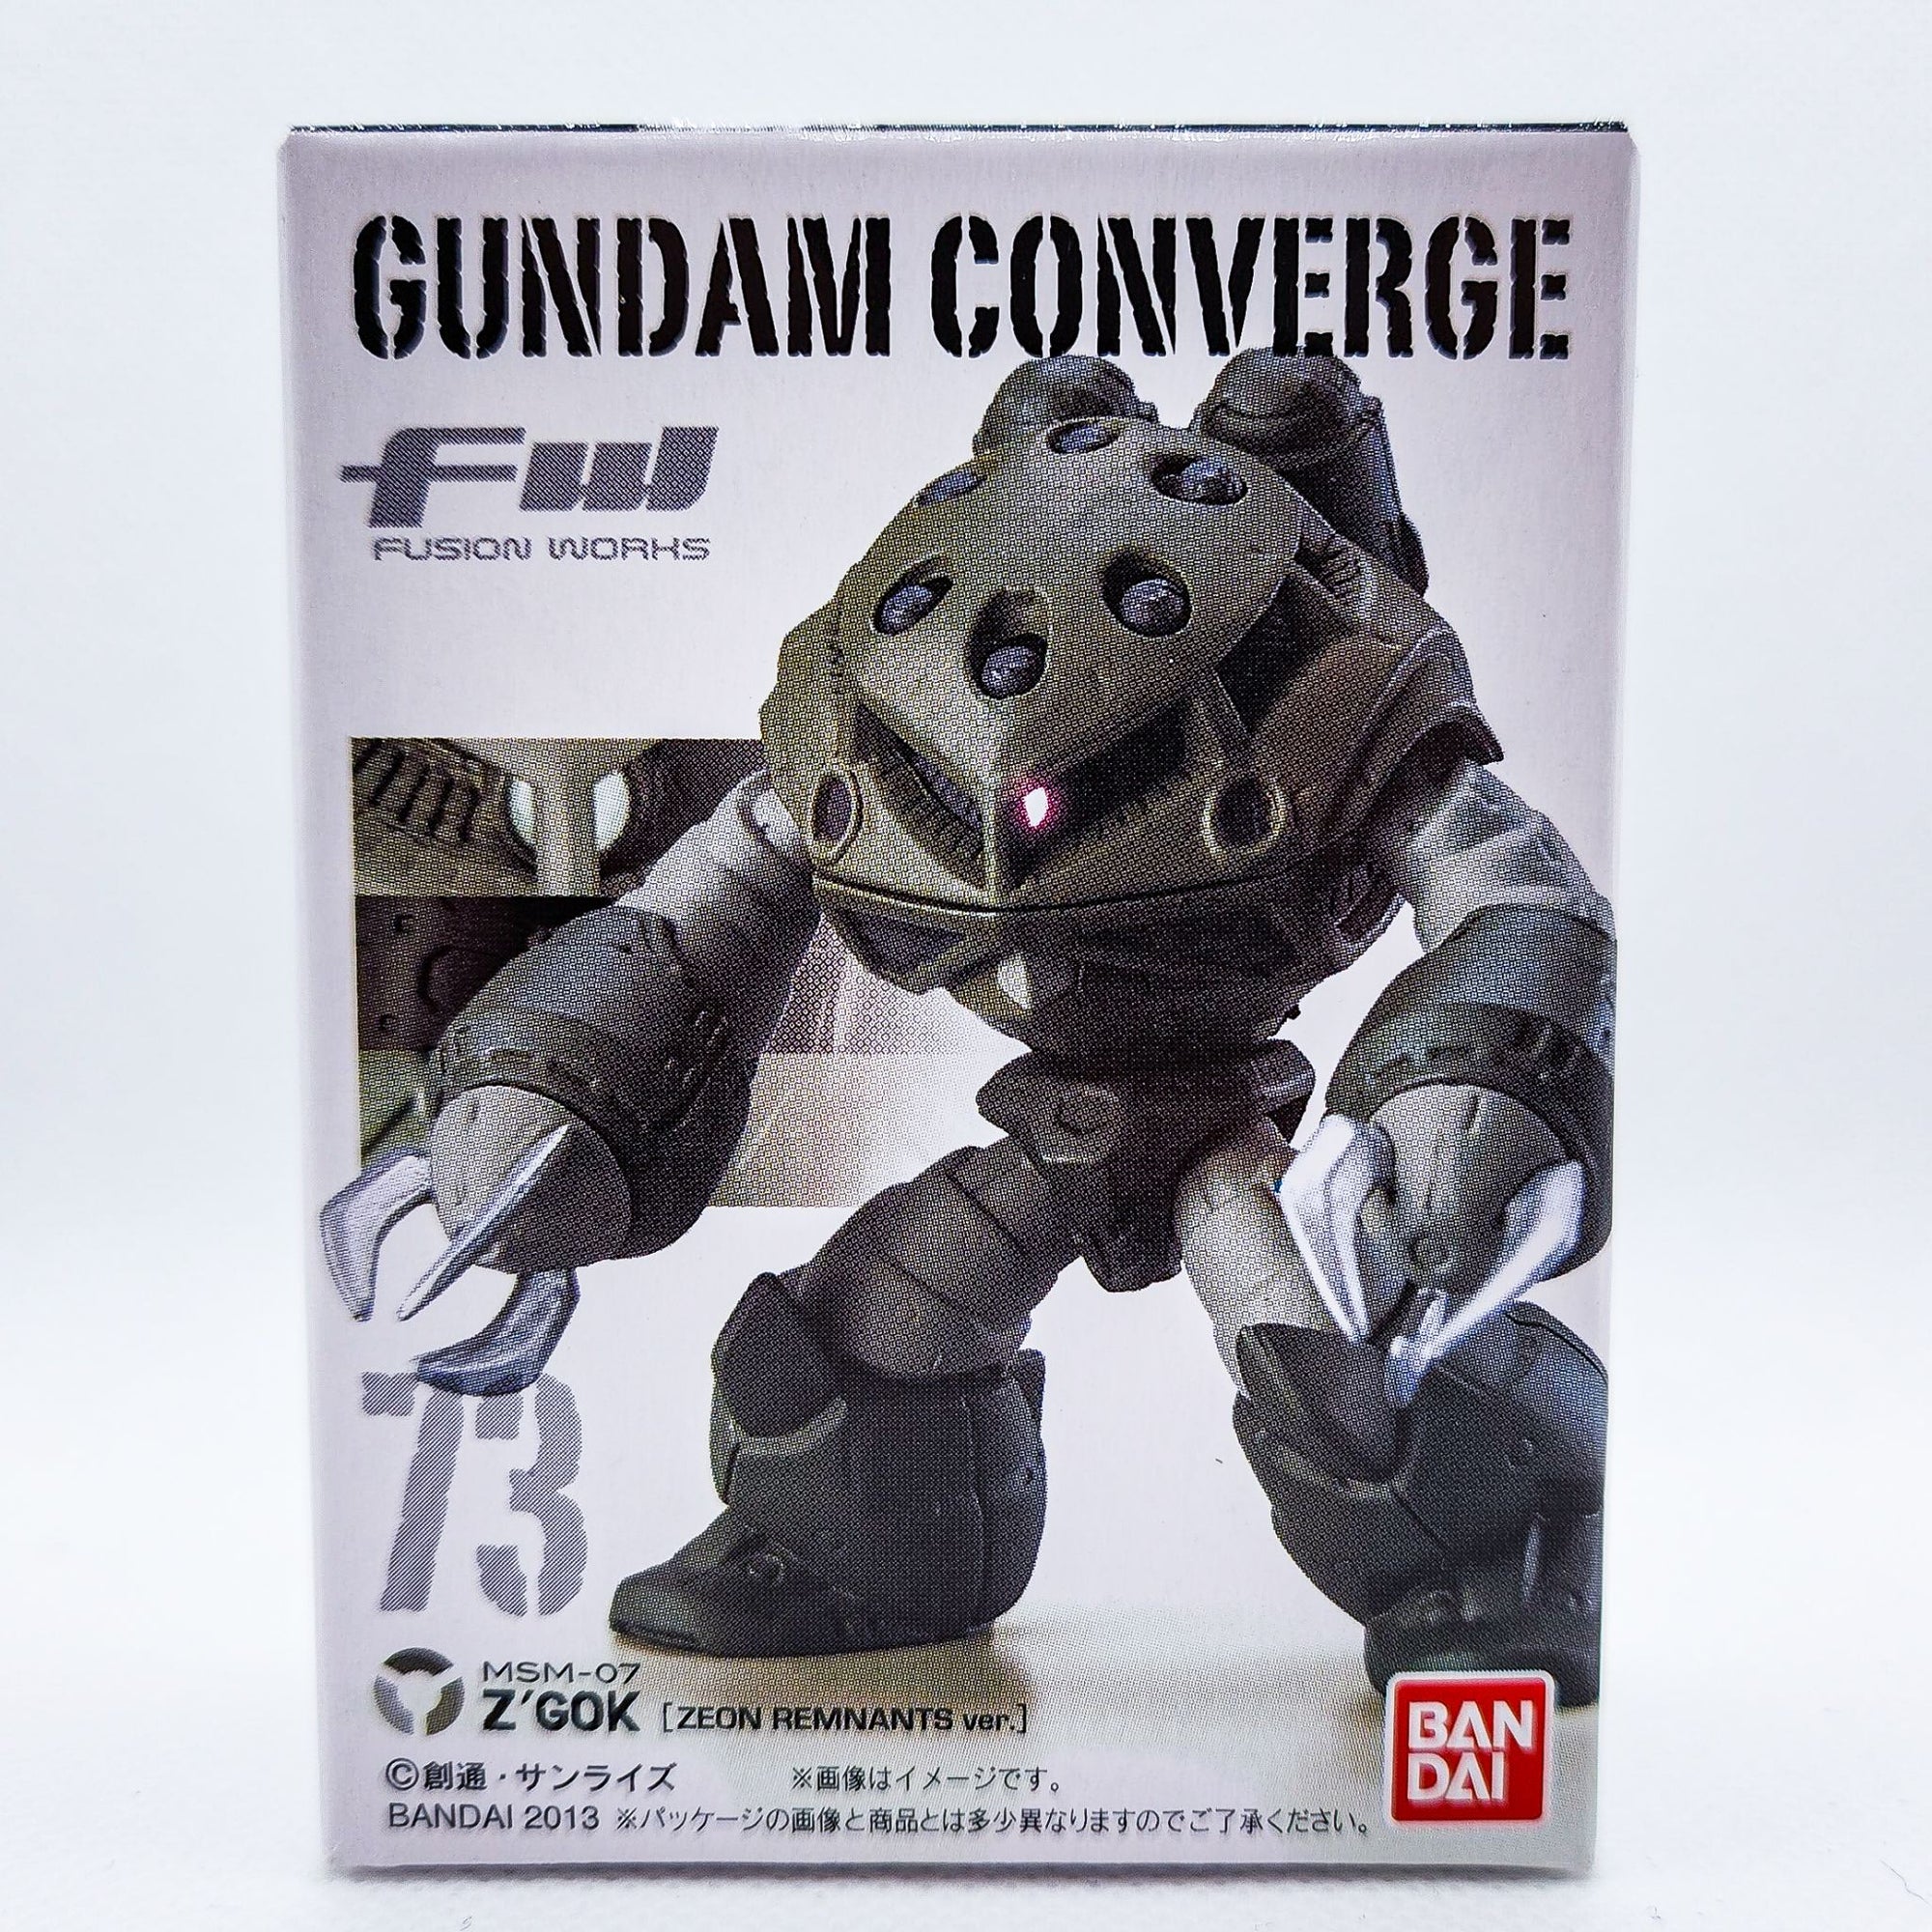 Gundam Converge #73 Z'Gok Zeon Remnants Version 1.0 by Bandai - 1